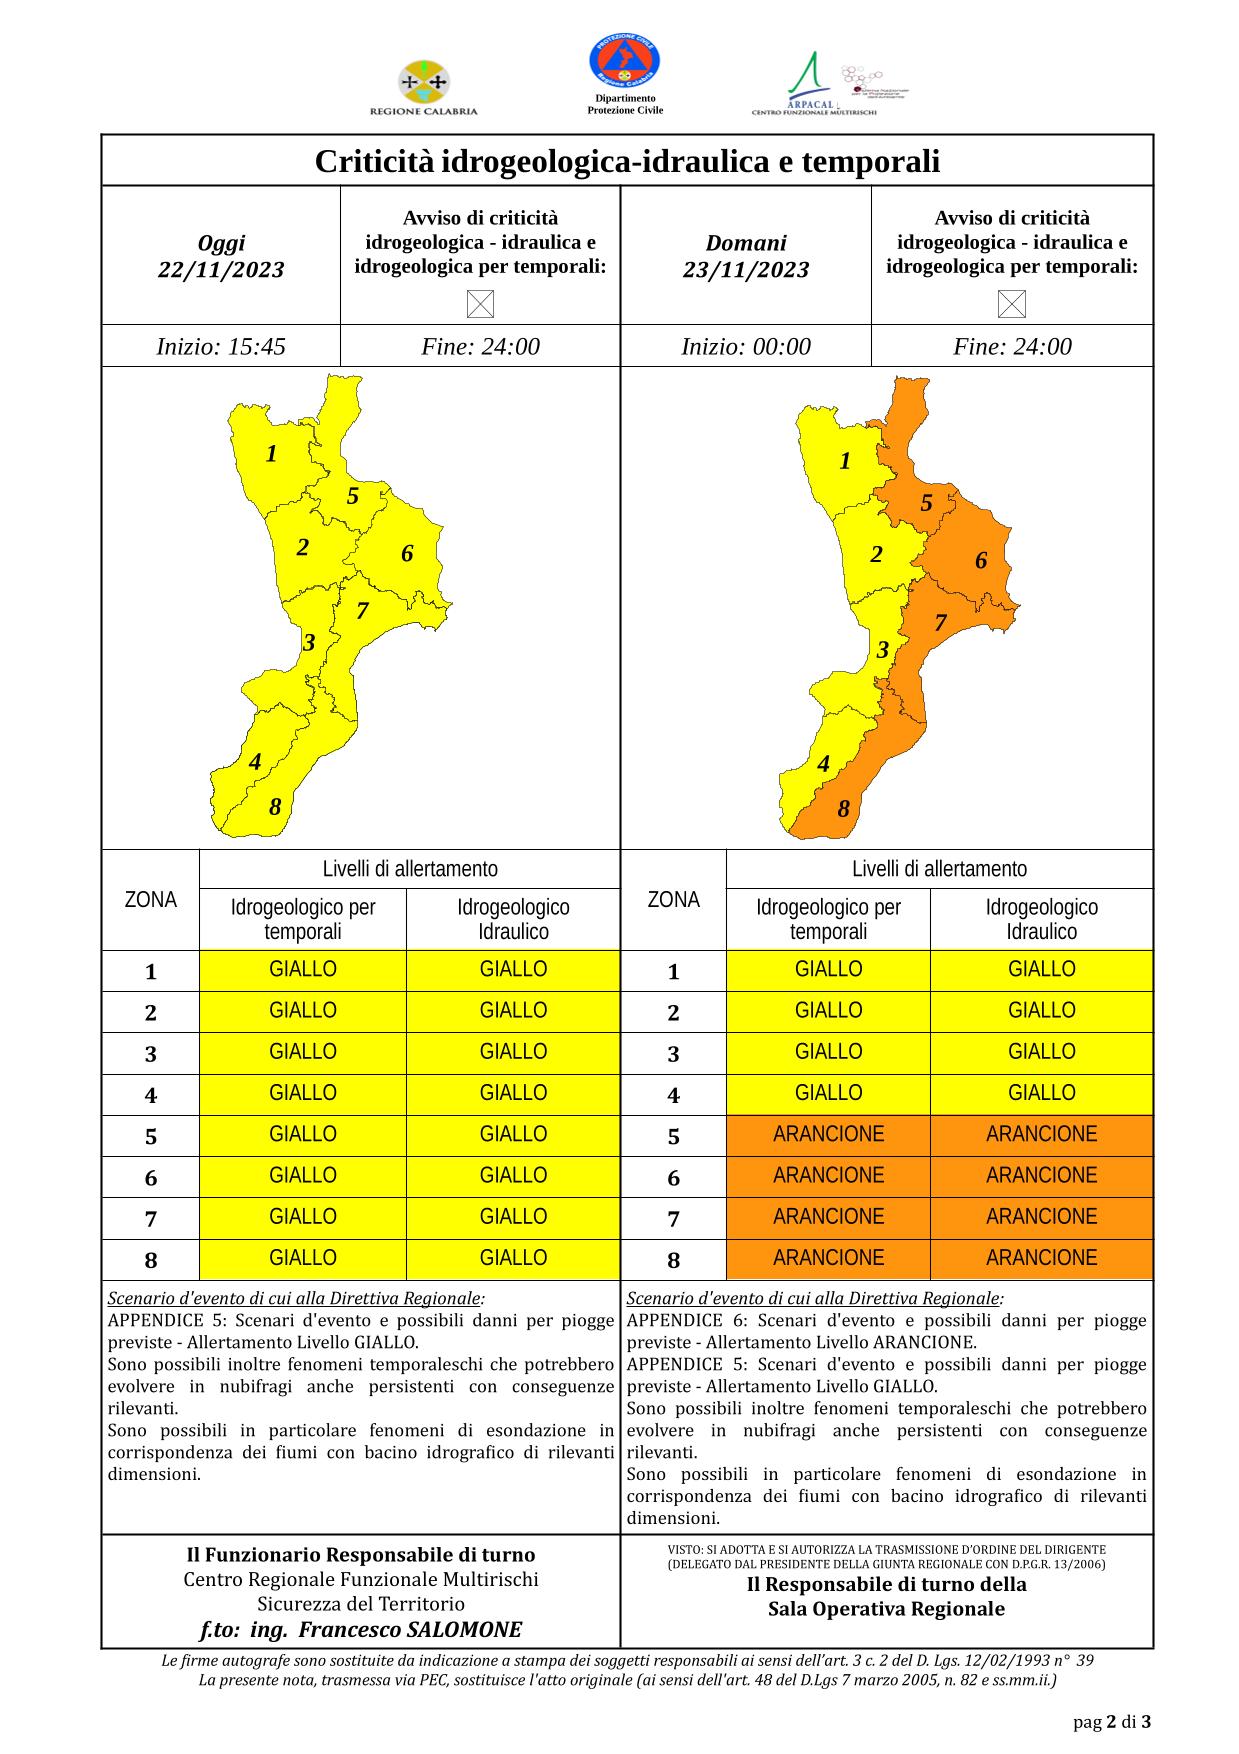 Criticità idrogeologica-idraulica e temporali in Calabria 22-11-2023